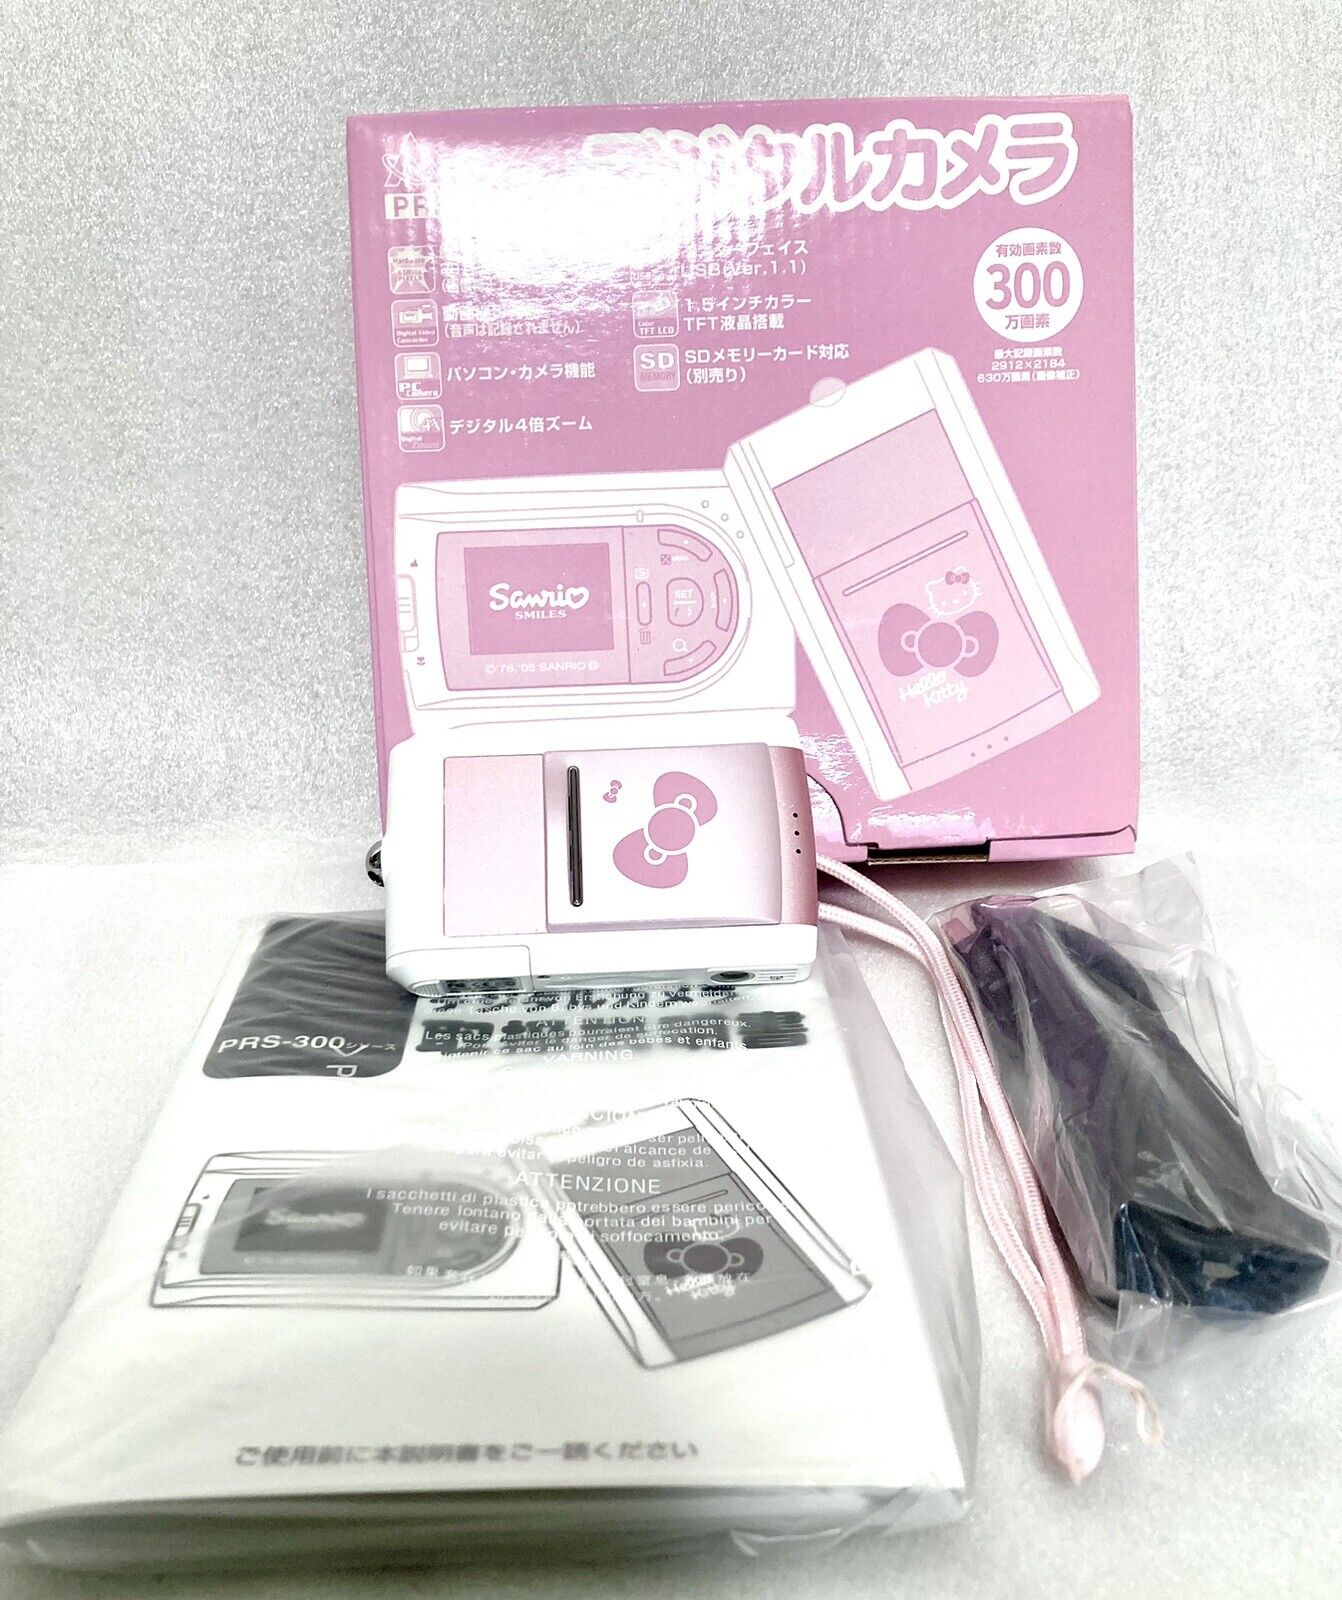 Rare Brand New Sanrio hello Kitty AVOX PRS-300K Digital Camera from JAPAN